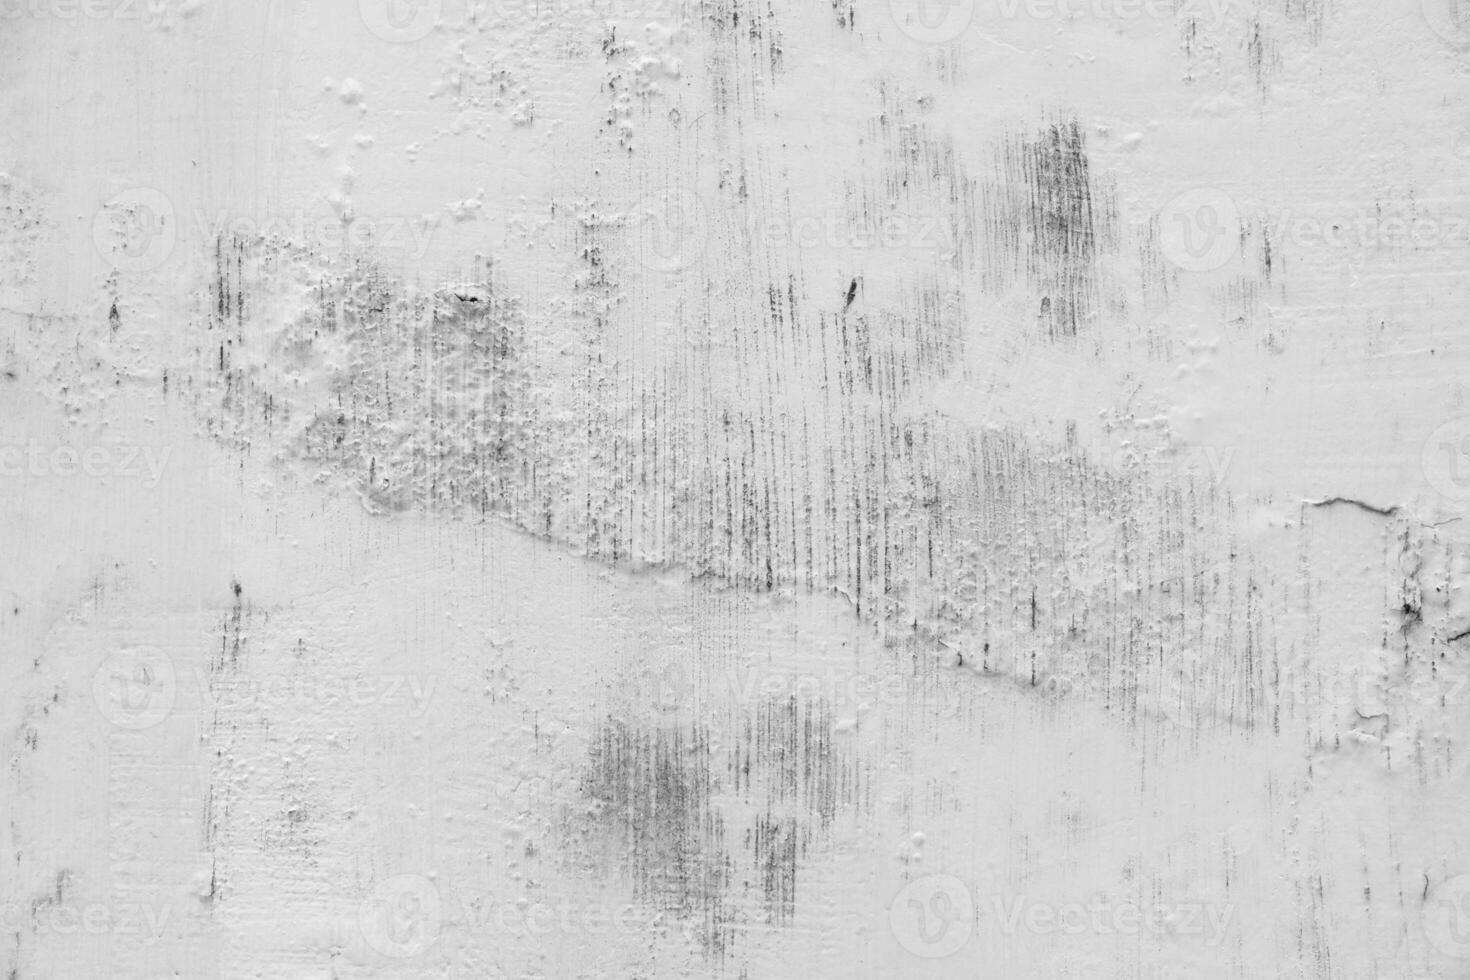 wit muur beton oud structuur cement grijs wijnoogst behang achtergrond vuil abstract grunge foto